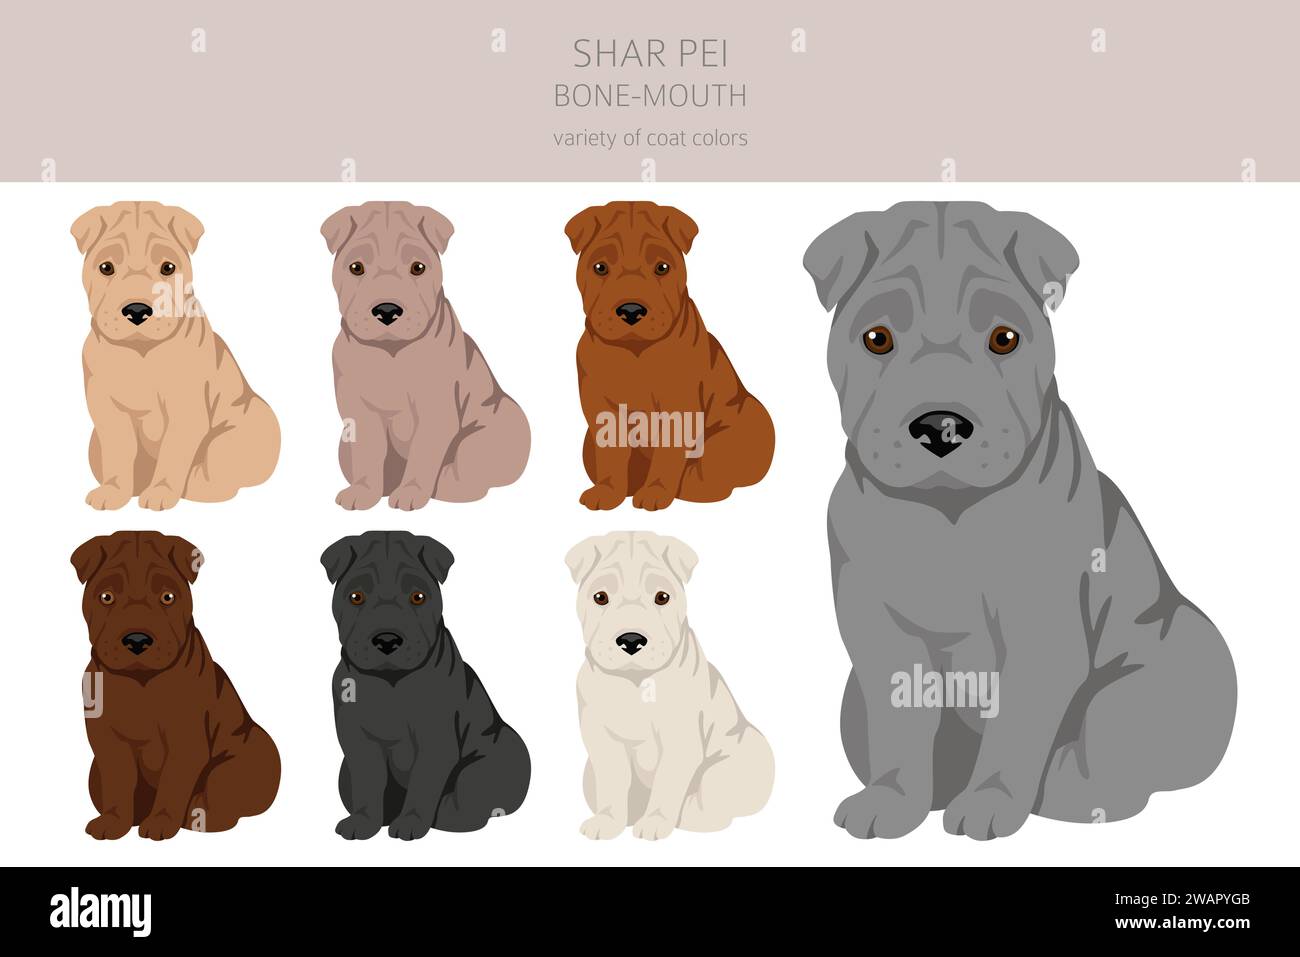 Shar Pei bone mouth puppies clipart. Different poses, coat colors set ...